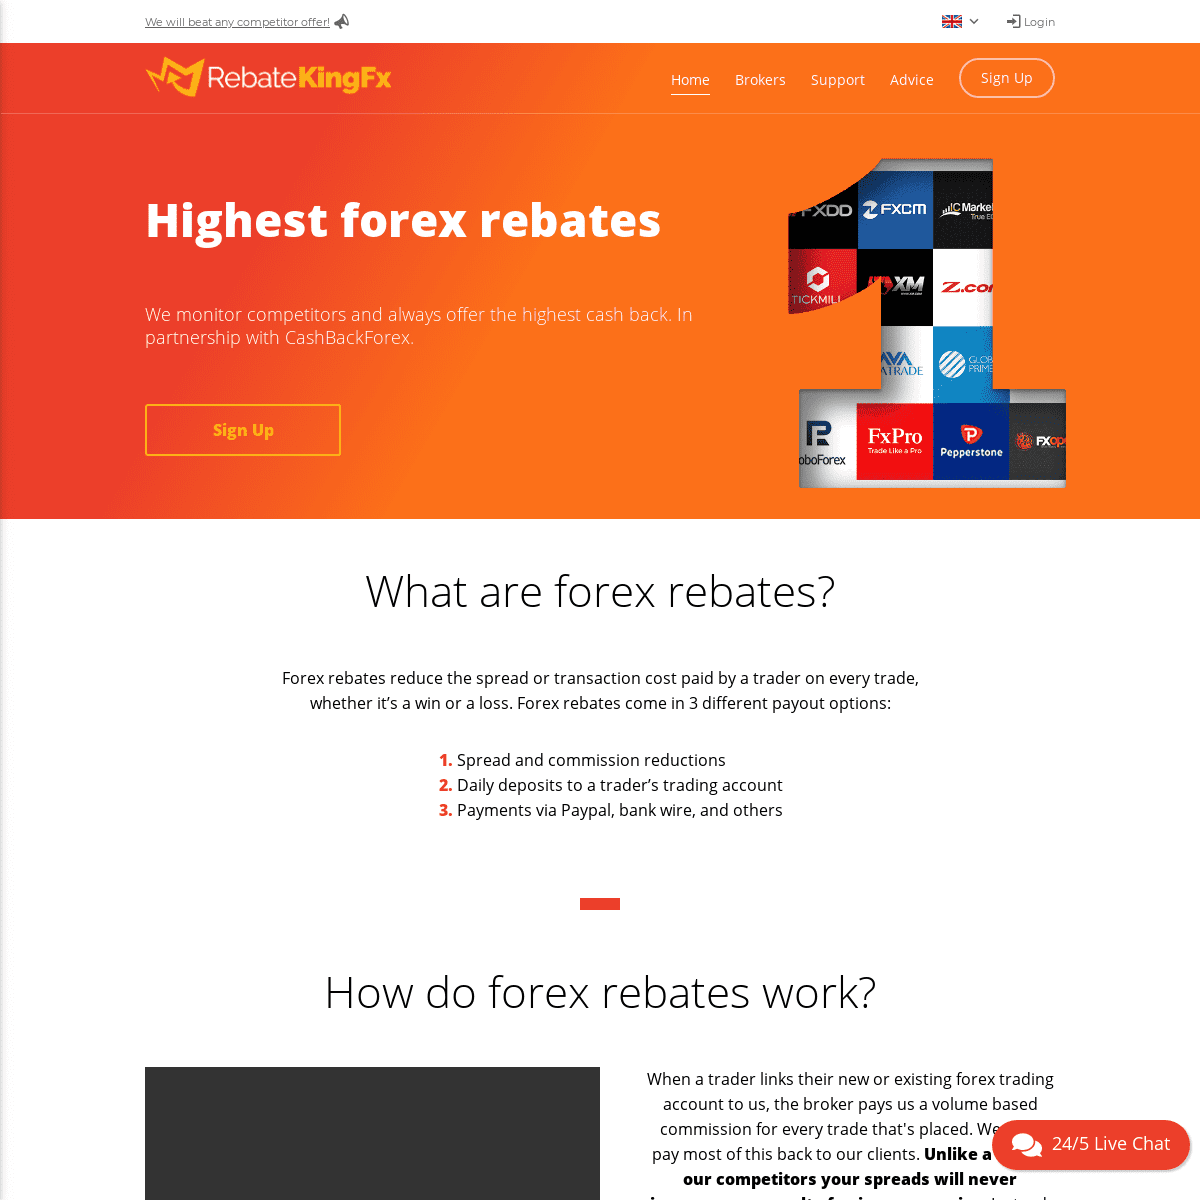 A complete backup of rebatekingfx.com